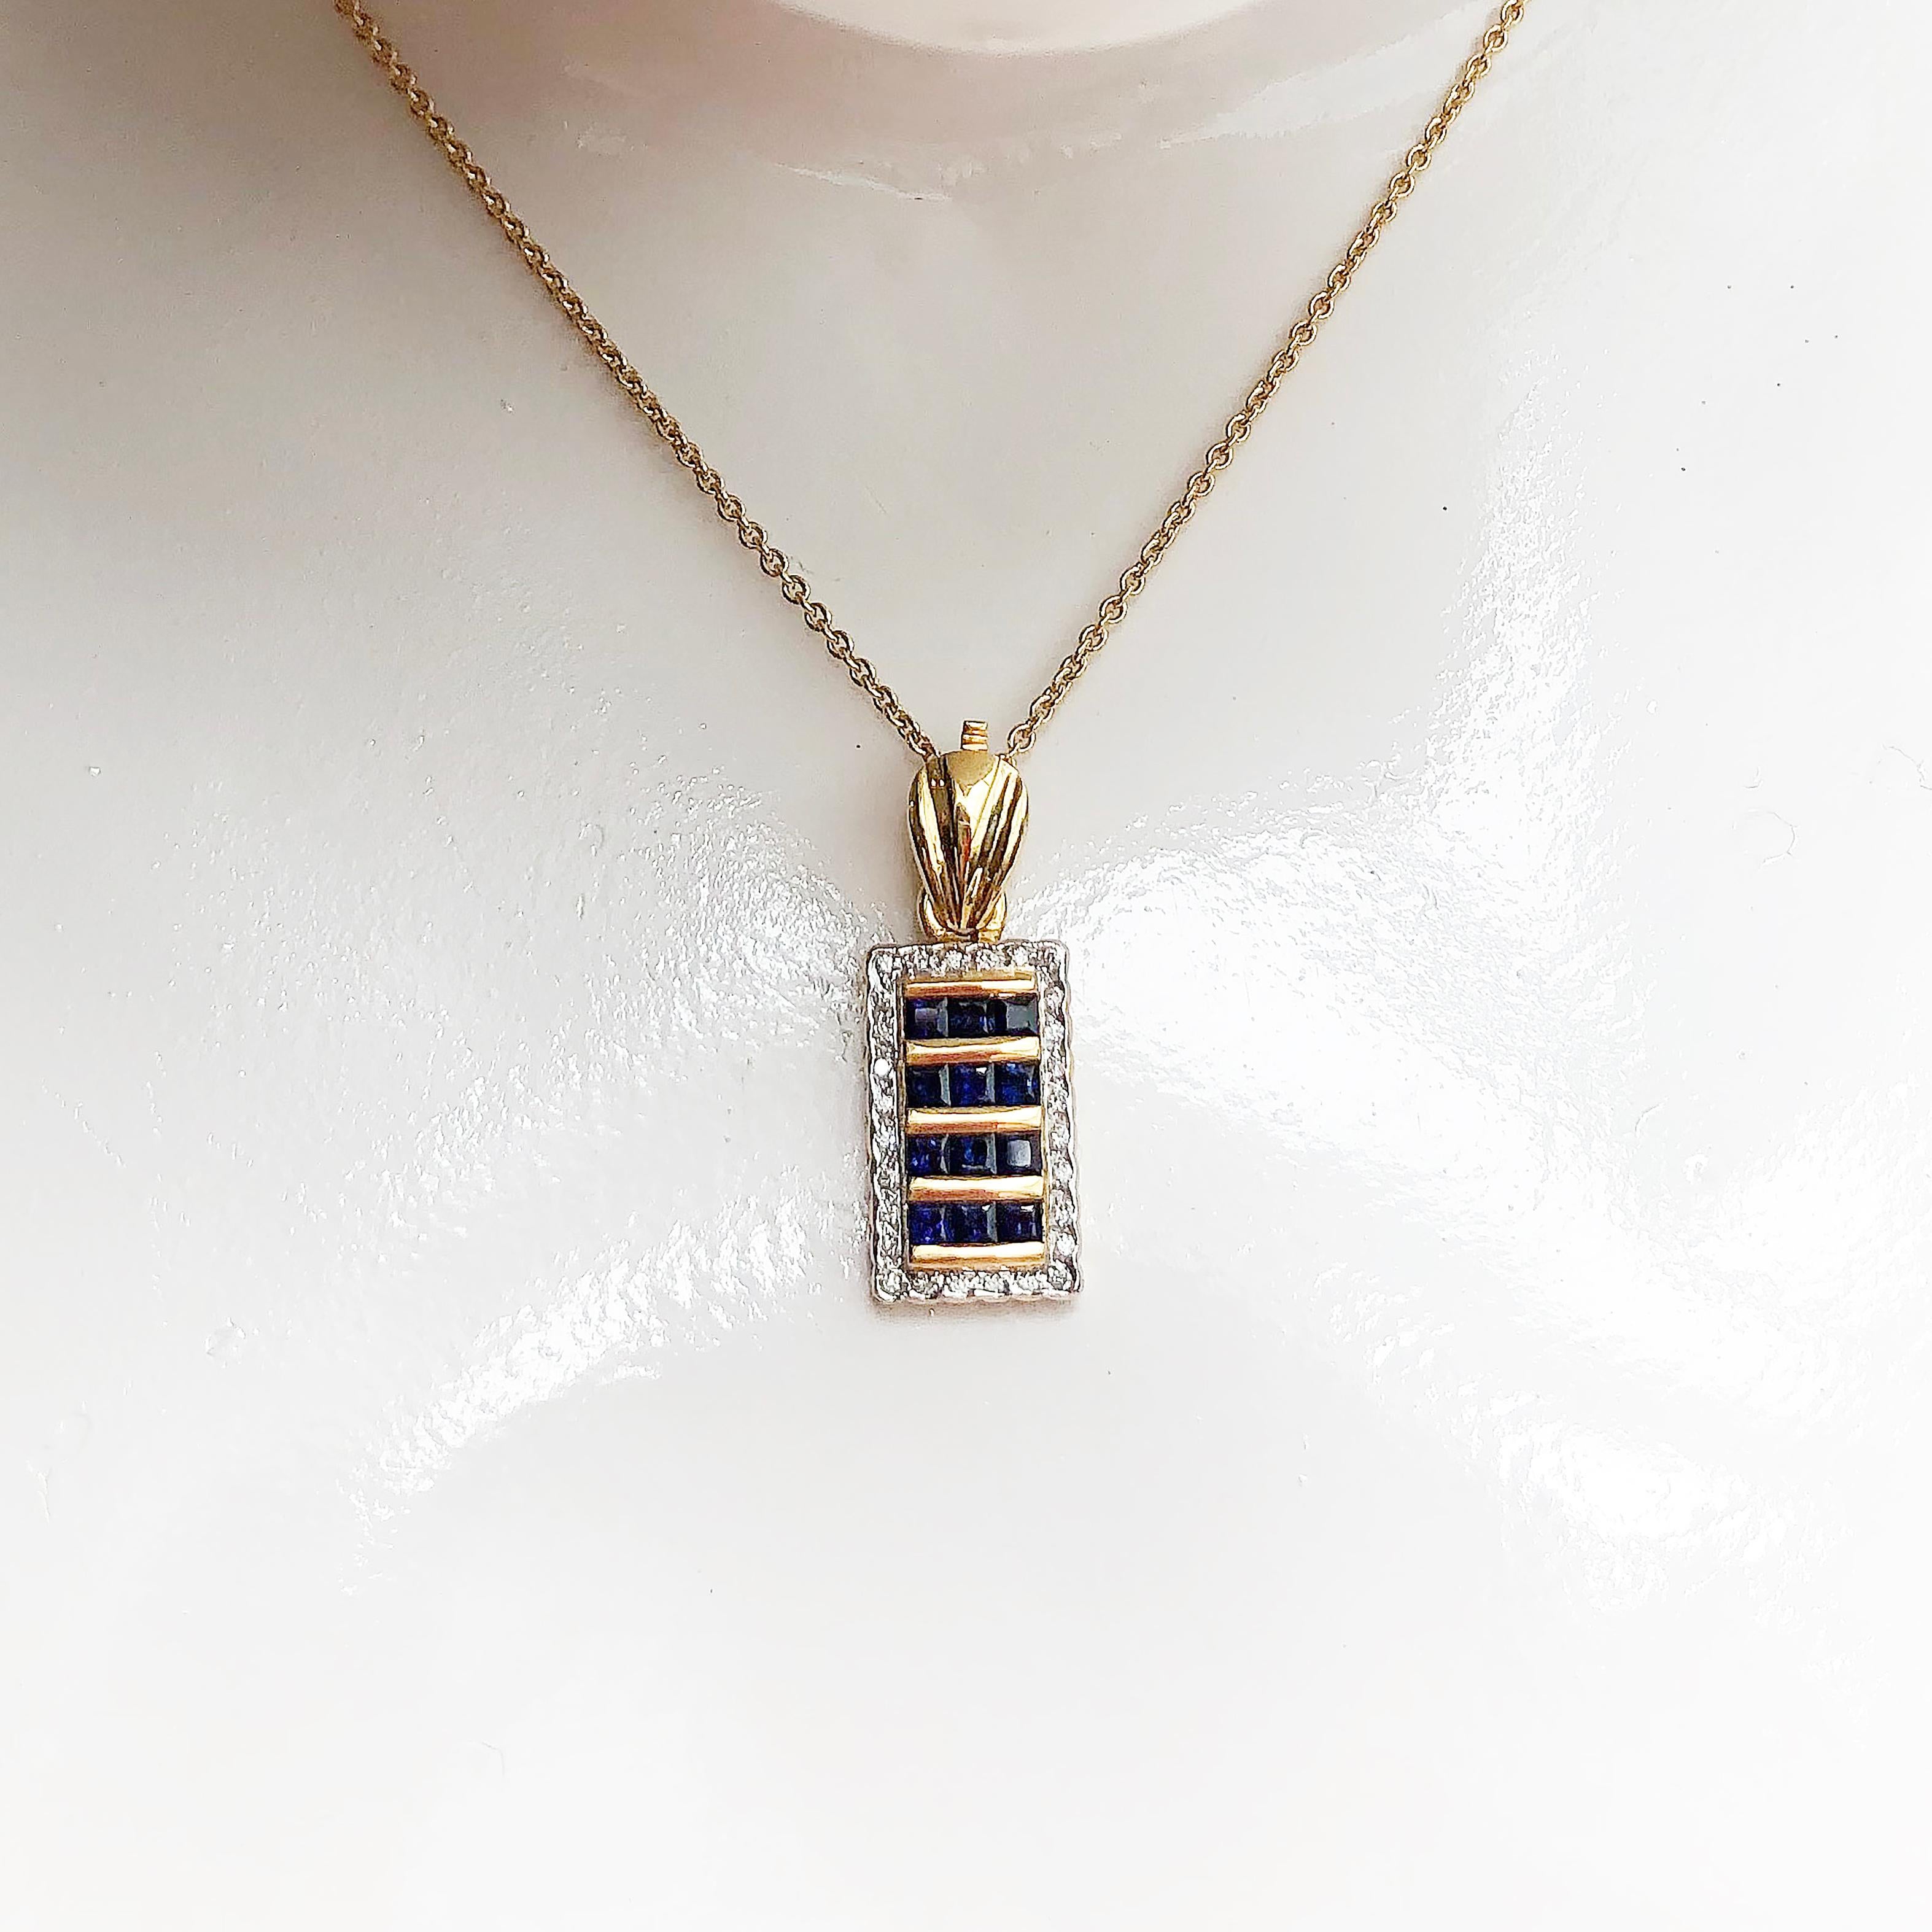 Blue Sapphire 0.88 carat with Diamond 0.21 carat Pendant set in 18 Karat Gold Settings
(chain not included)

Width: 1.0 cm
Length: 2.8 cm 

